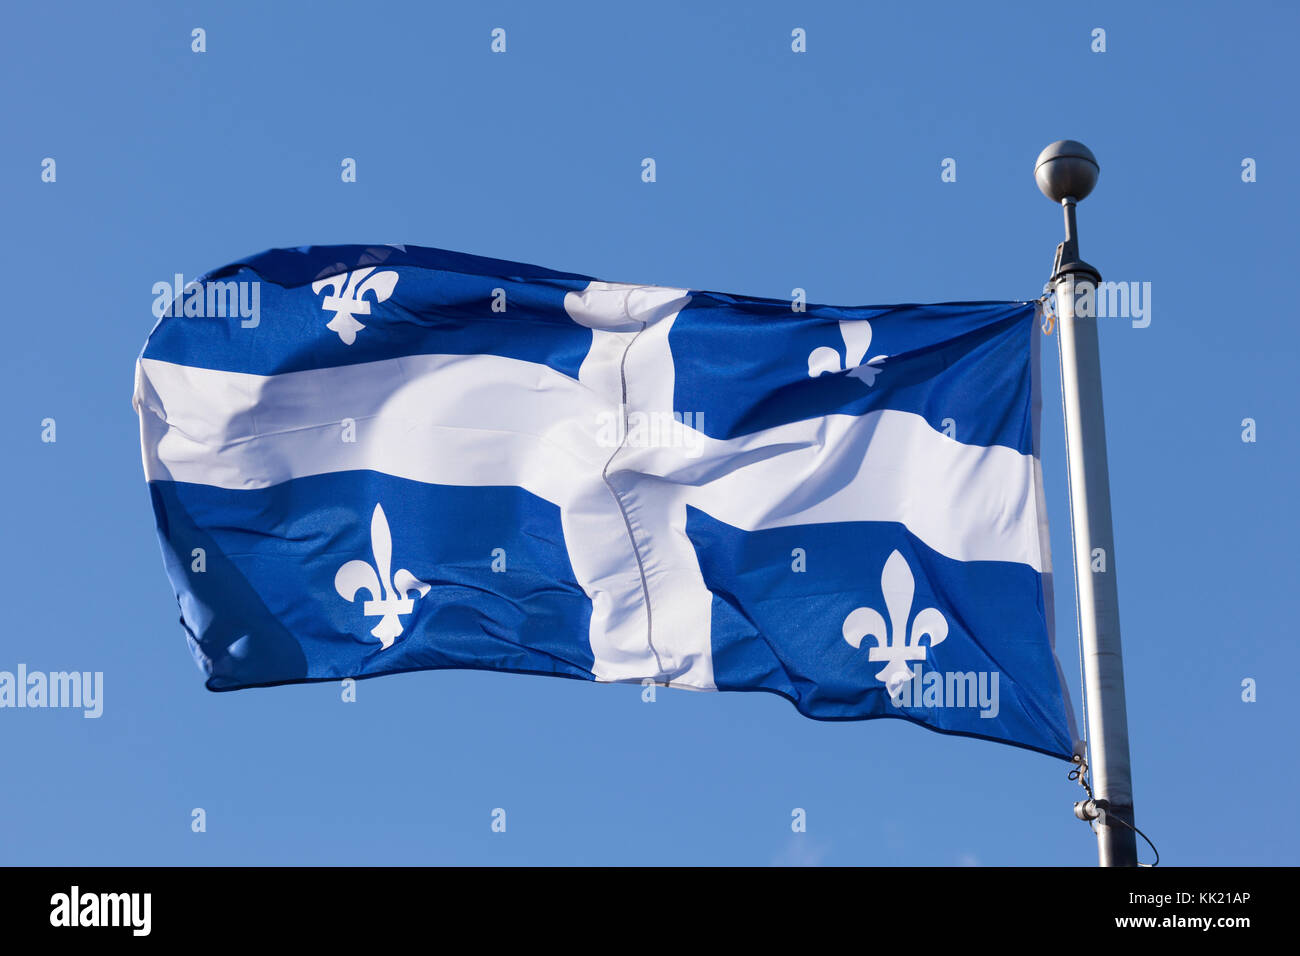 Le drapeau national du Québec, Canada Banque D'Images